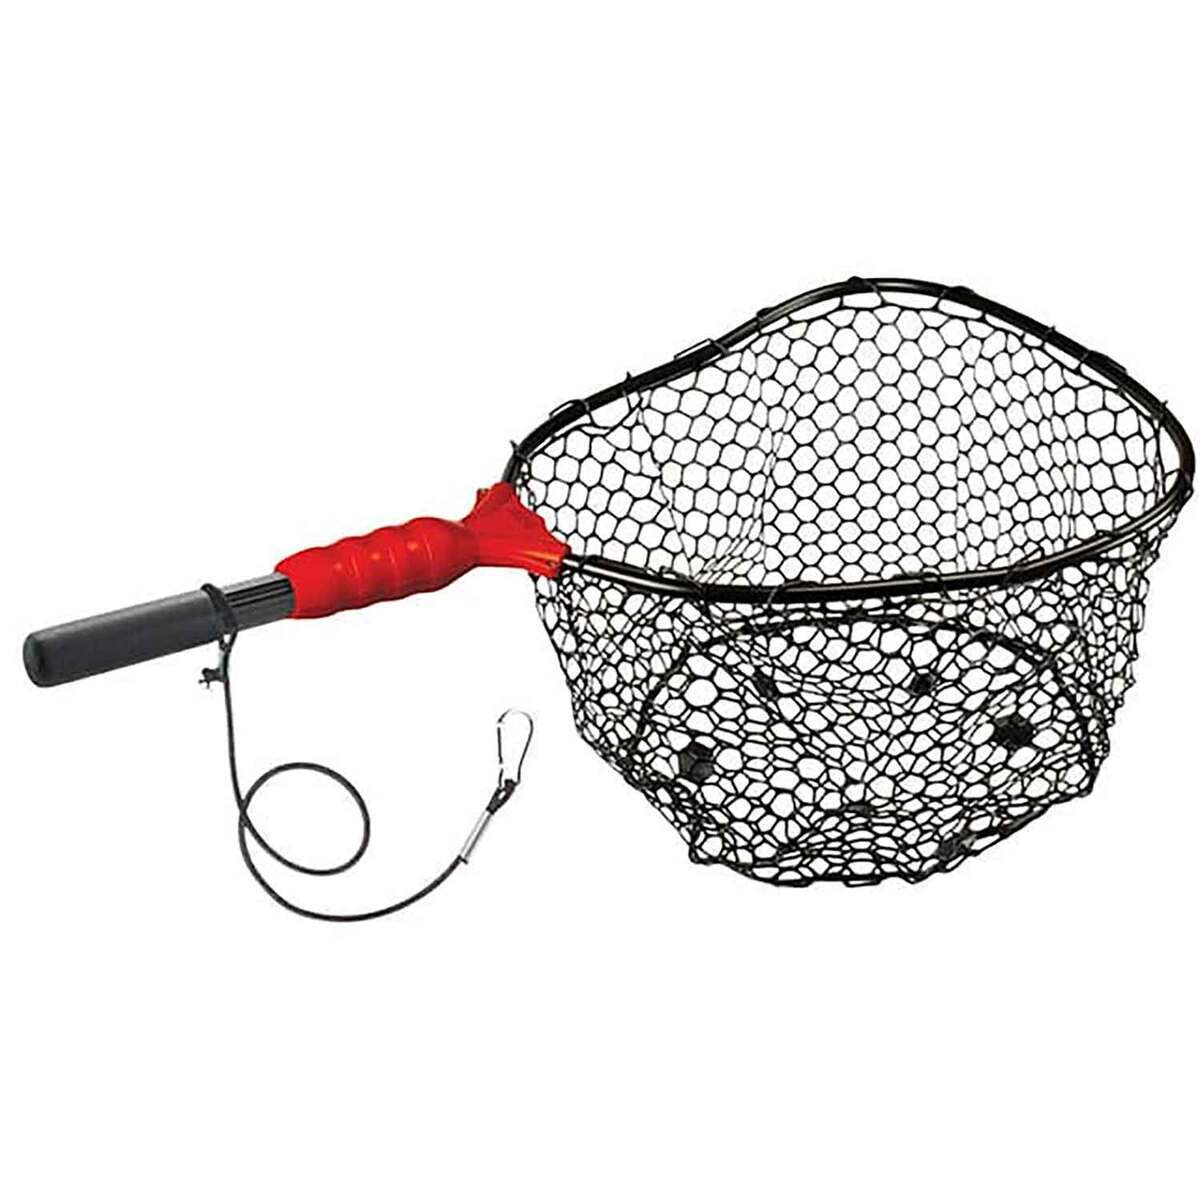 Ego Wade Medium Rubber Fishing Net